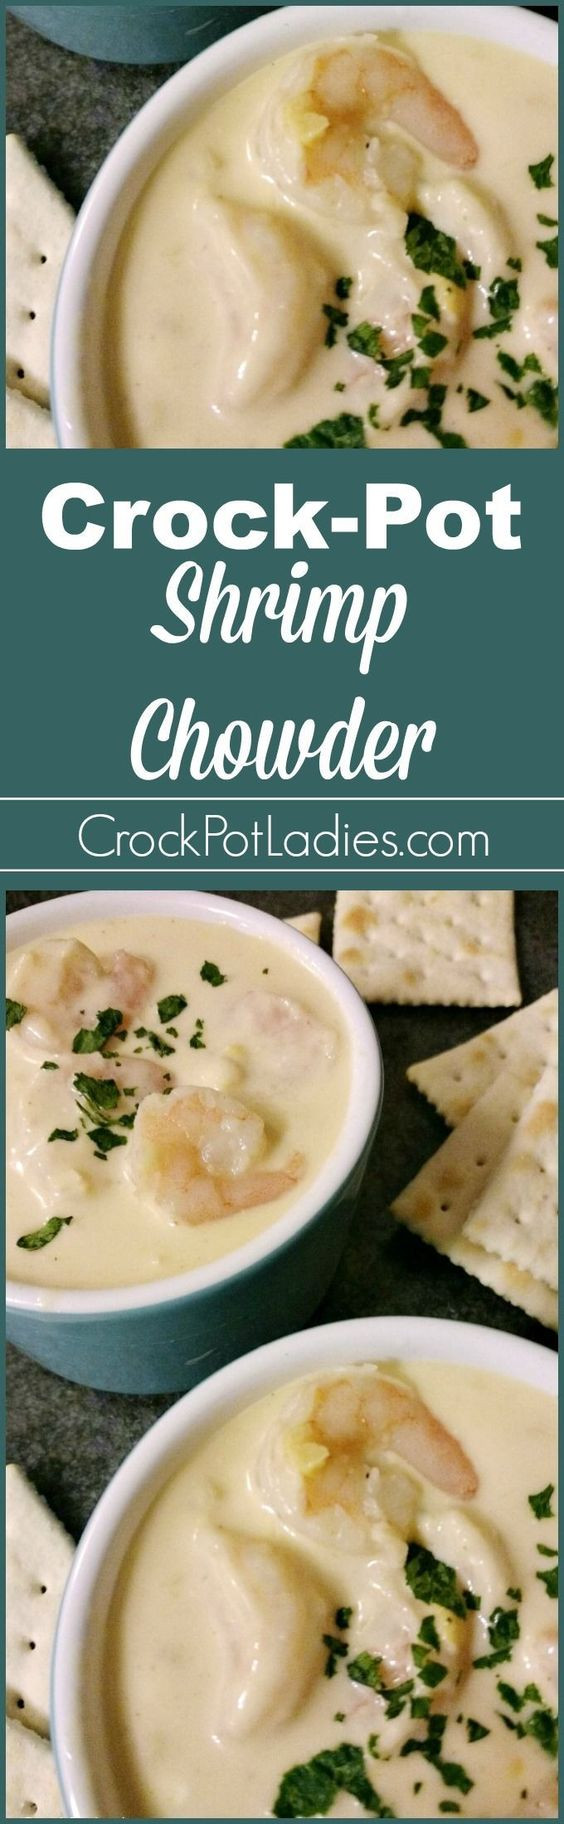 Seafood Chowder Crock Pot
 Crock Pot Shrimp Chowder Recipe